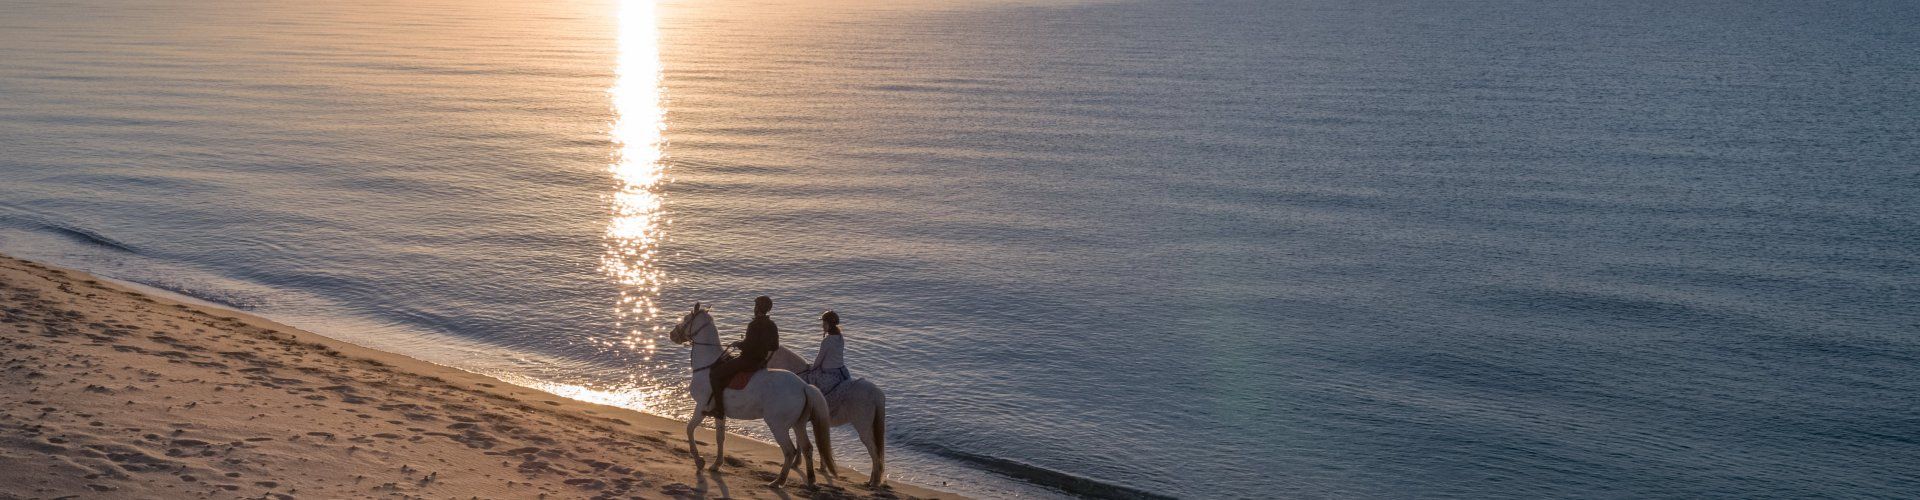 Horsebackriding at sunrise at Costa Rei